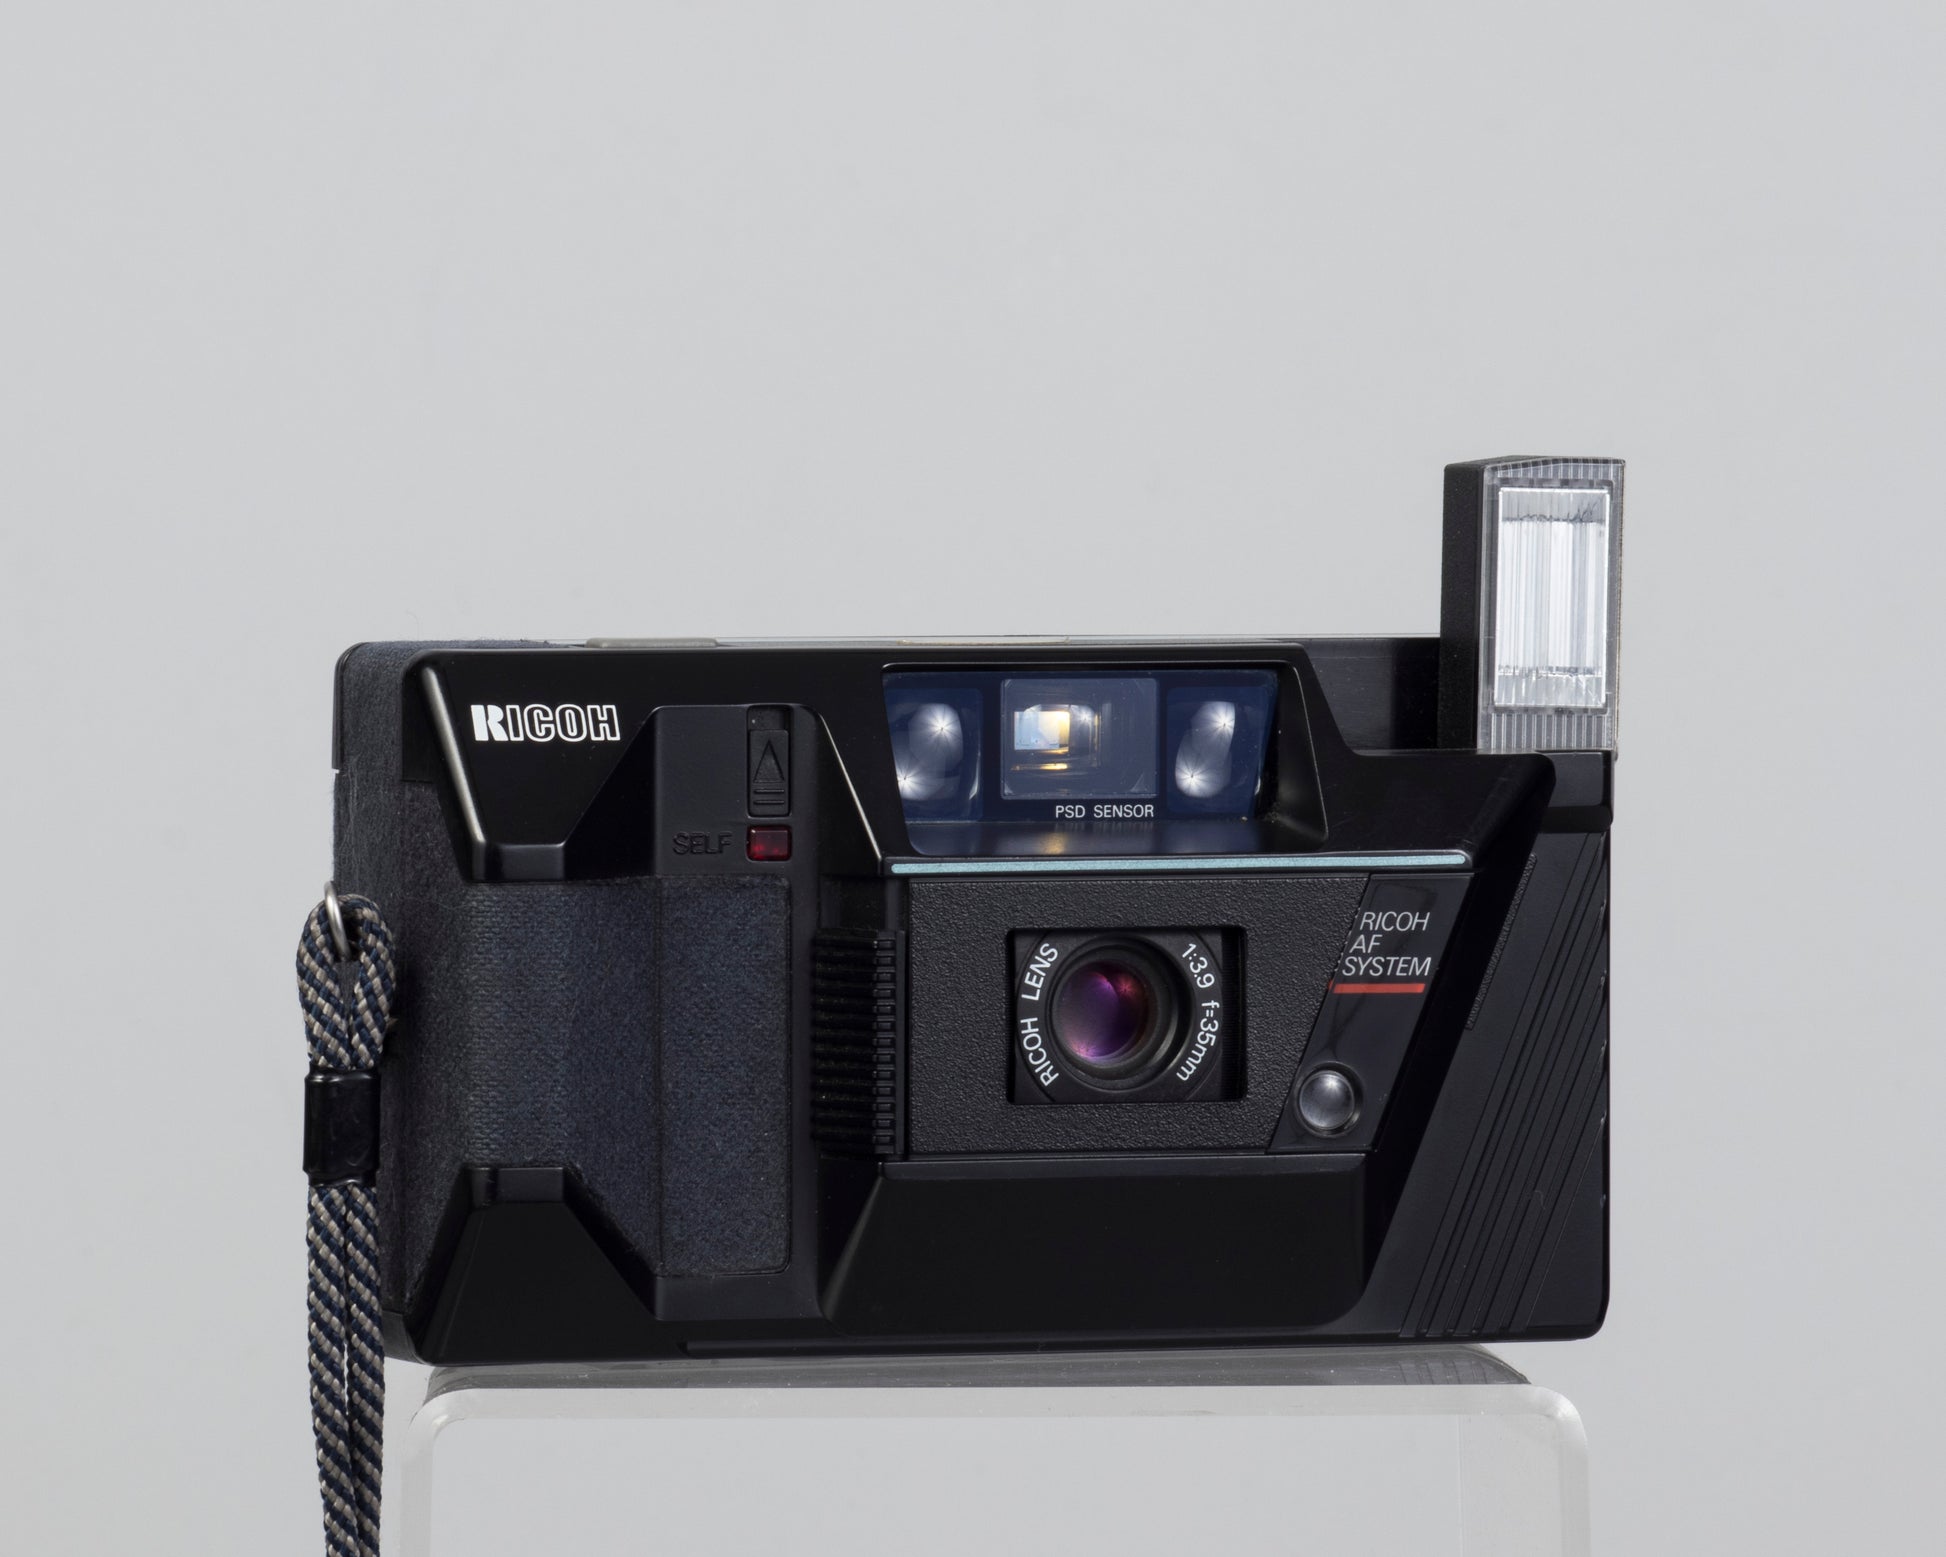 Ricoh AF-55 (aka AF-45) a compact 35mm film camera from circa 1988